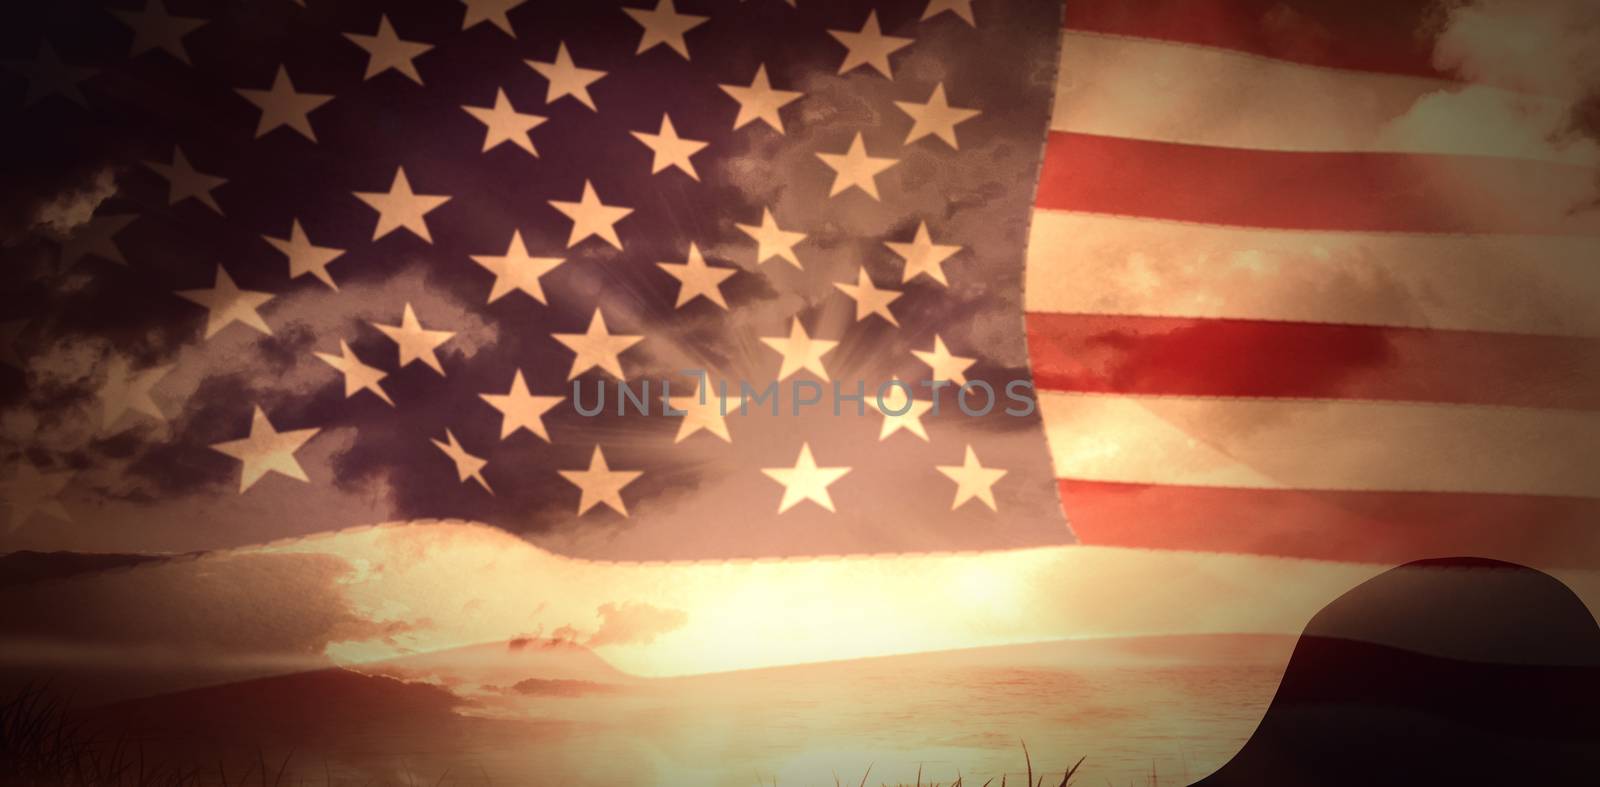 United states of america flag against sunrise over grass